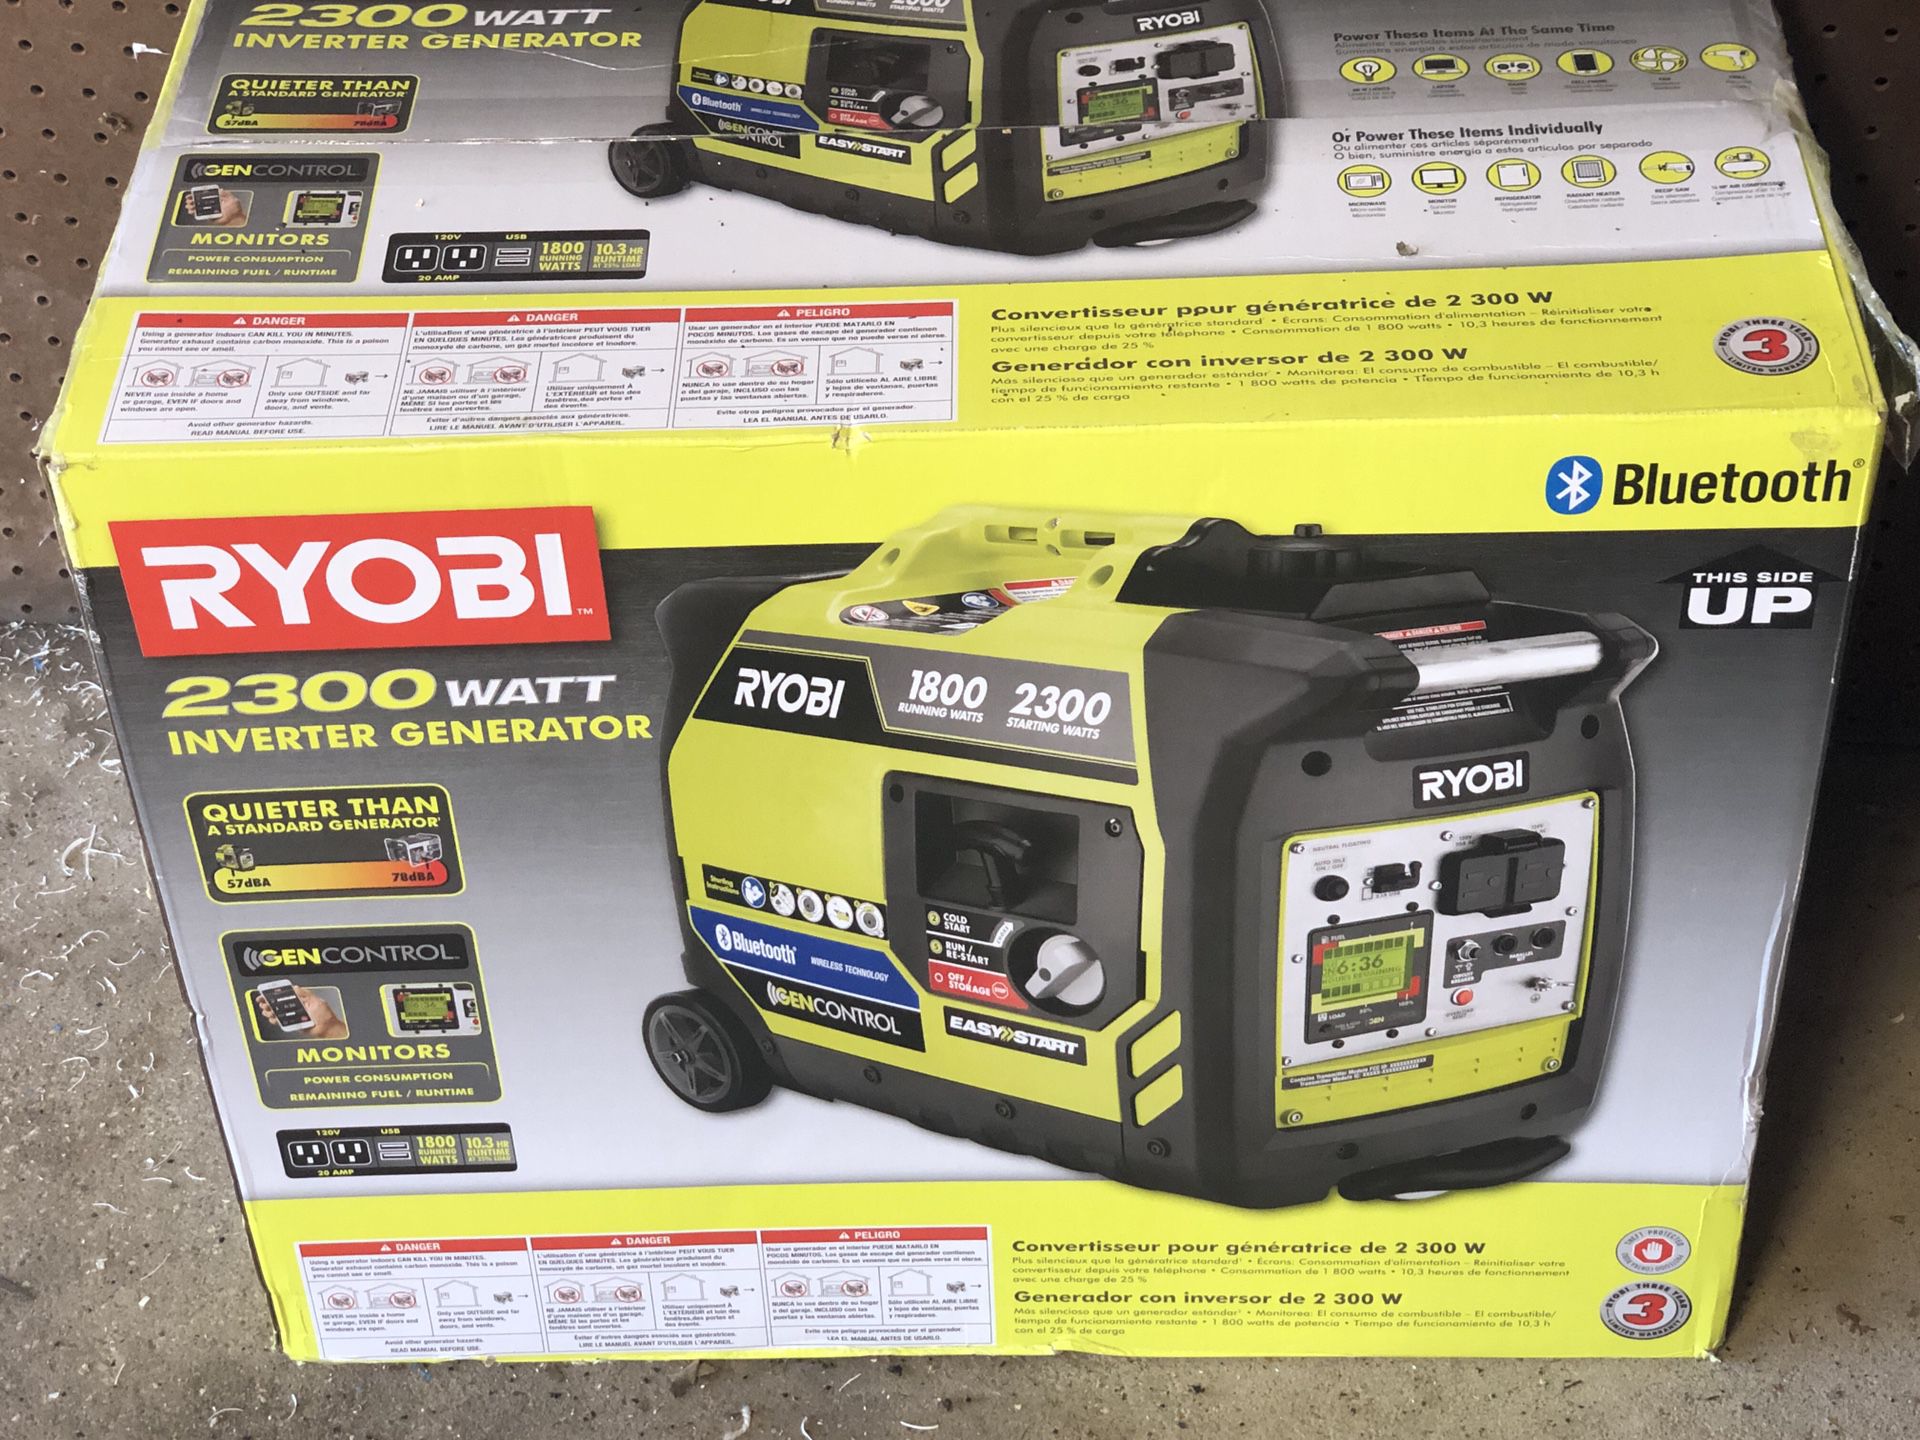 Ryobi 2300 watt Inverter Generator with Bluetooth